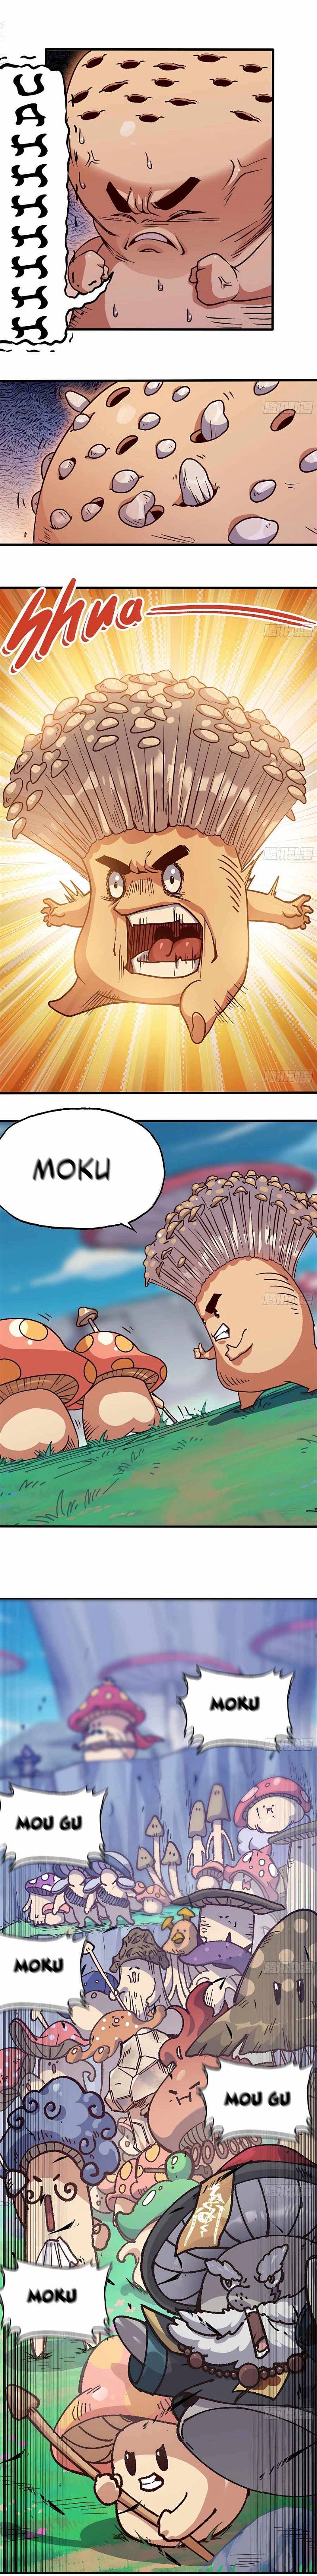 Mushroom Hero Chapter 28 page 9